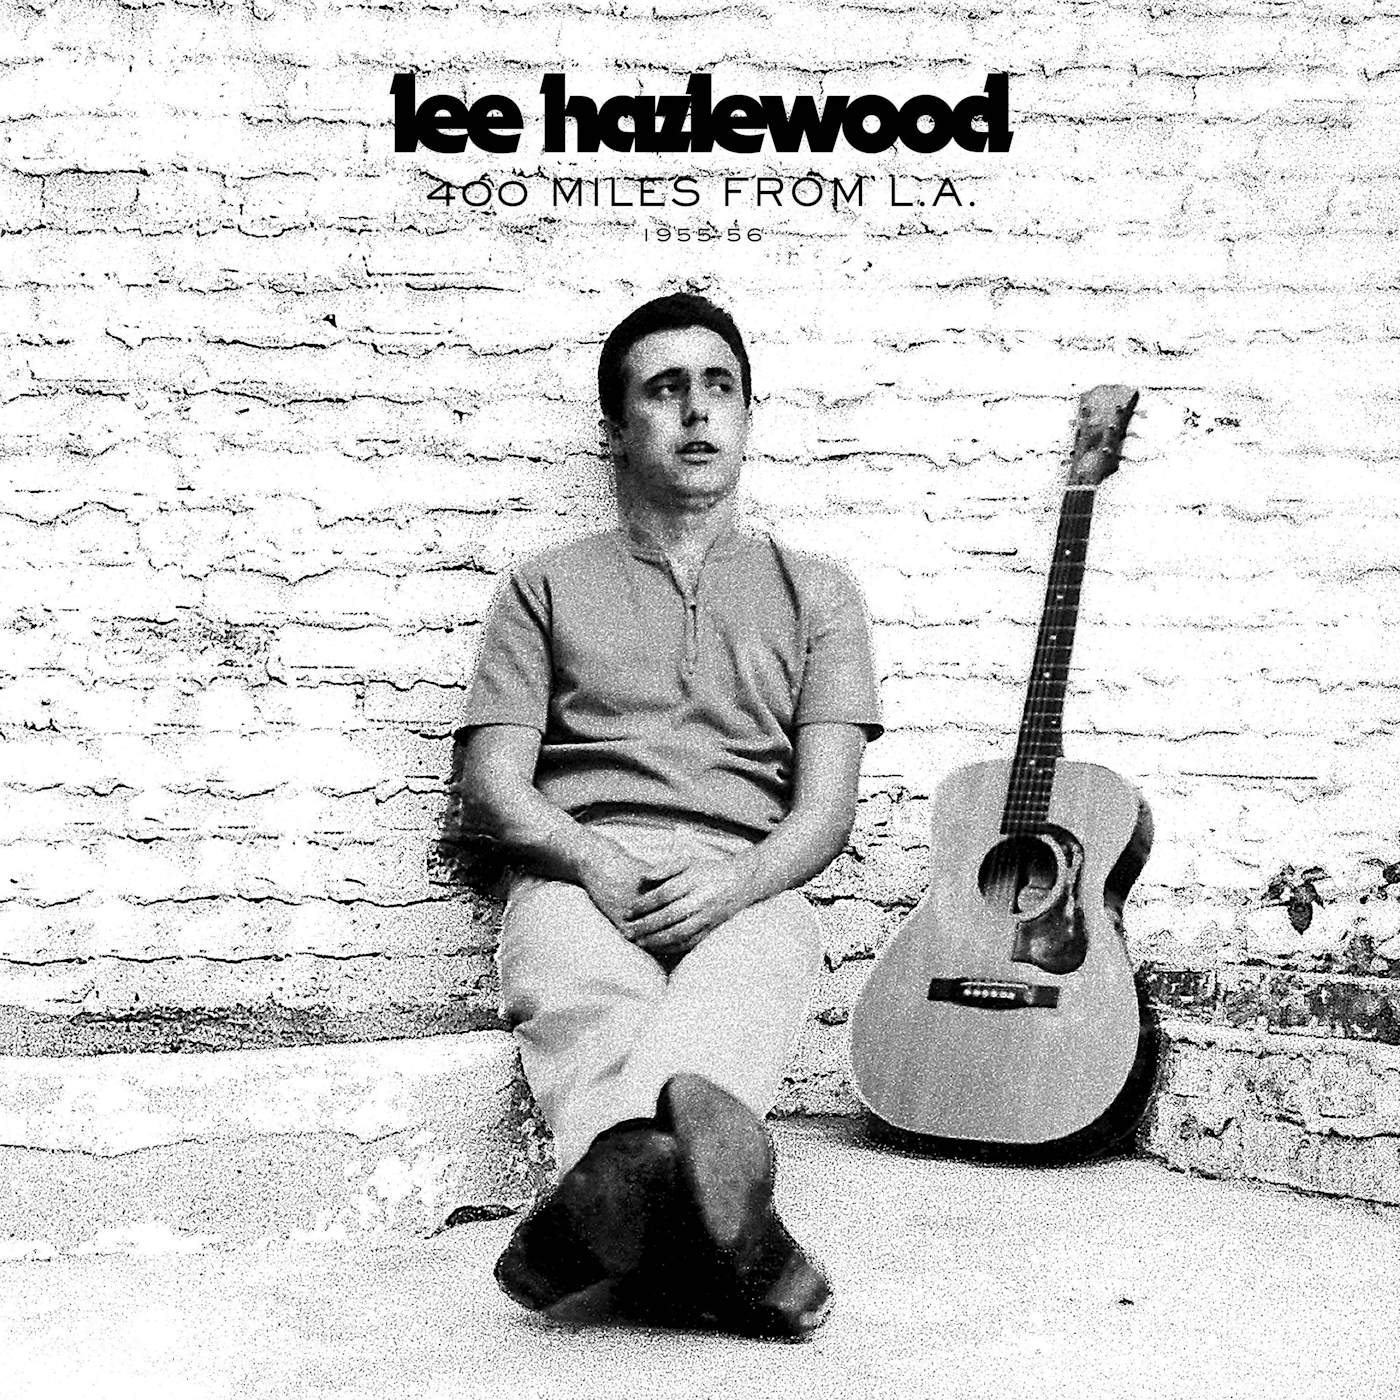 Lee Hazlewood 400 Miles from L.a. 1955-56 Vinyl Record